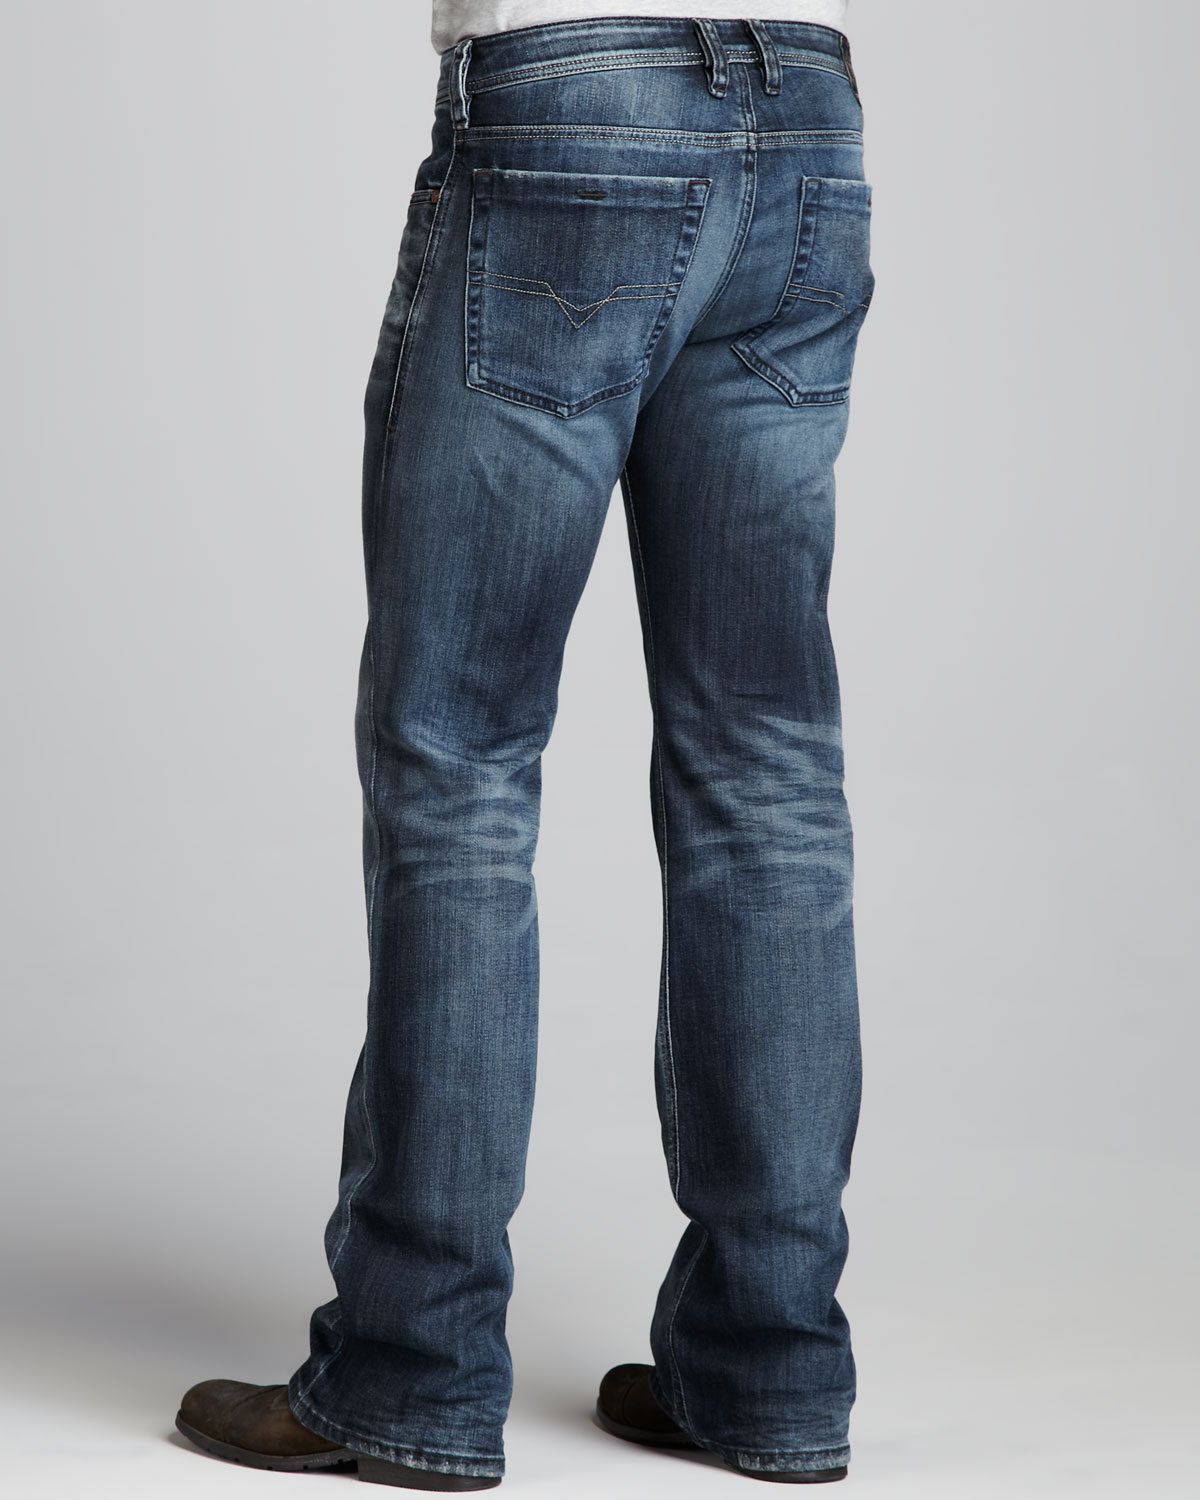 faded jeans mens dark boot cut